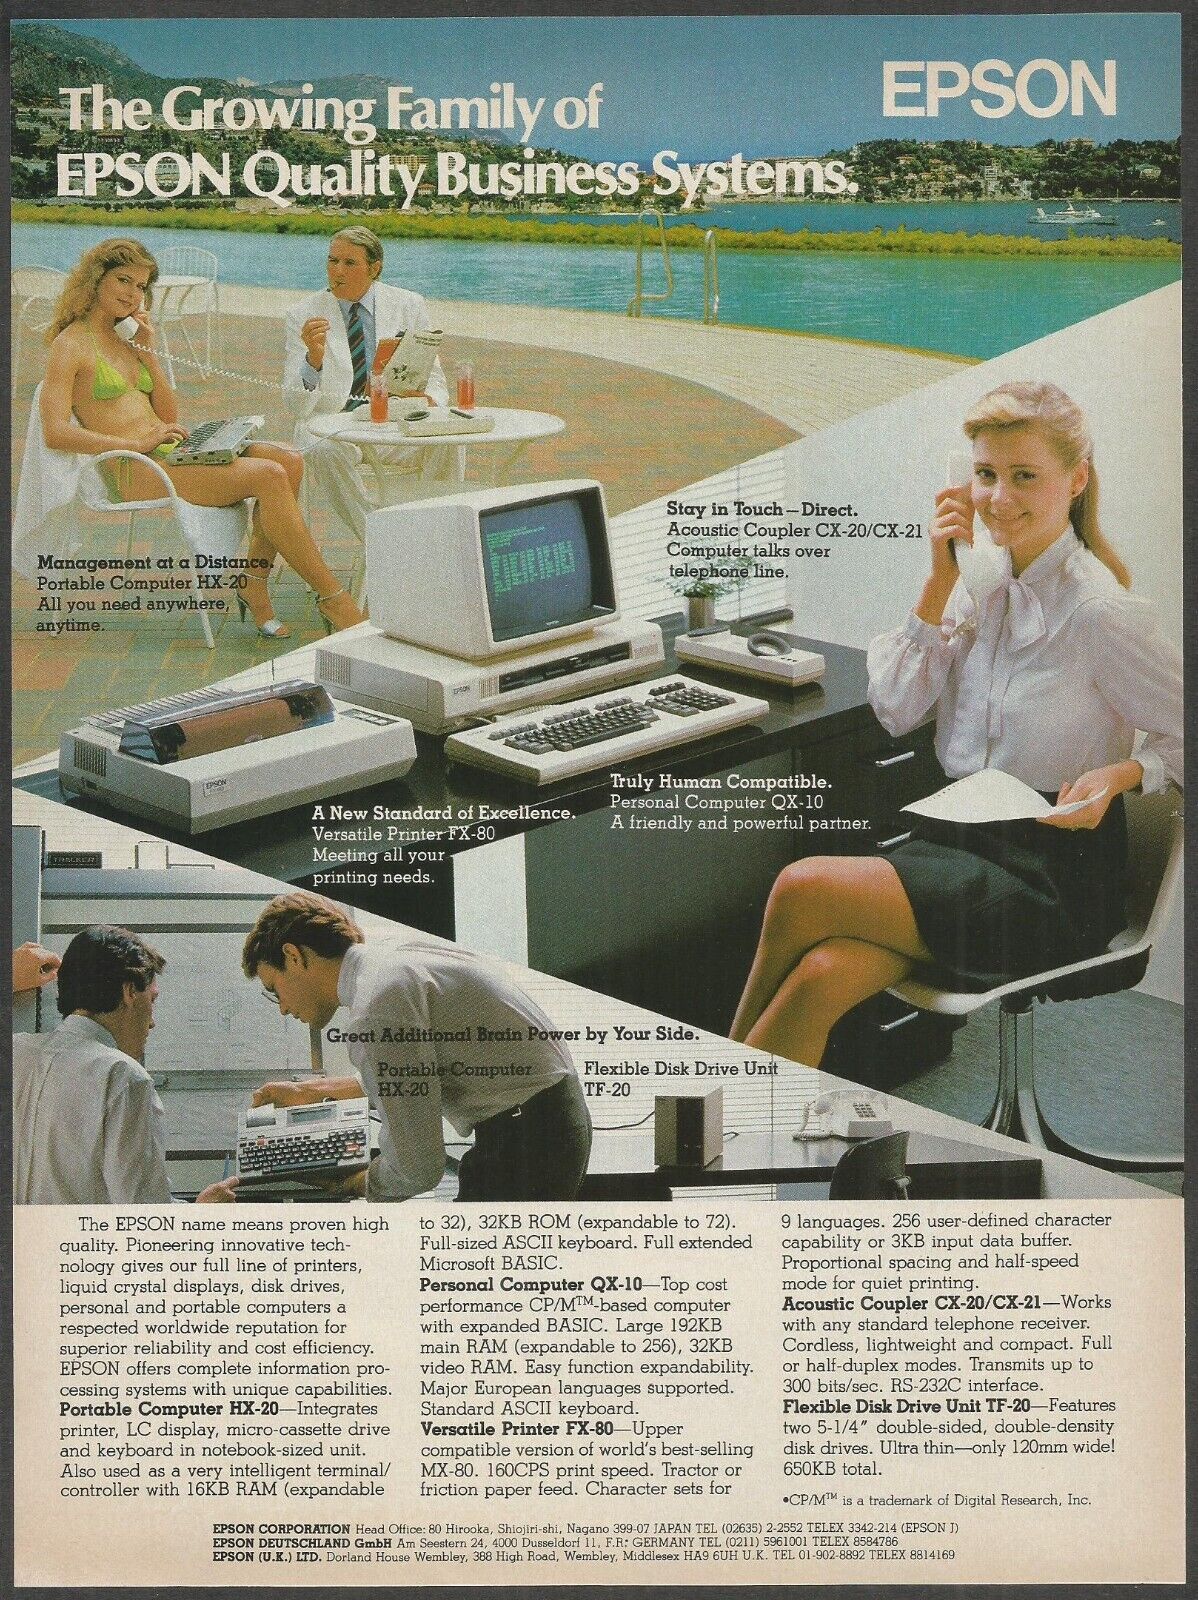 EPSON Personal Computer QX-10, Portable Computer HX-20 - 1983 Vintage Print Ad